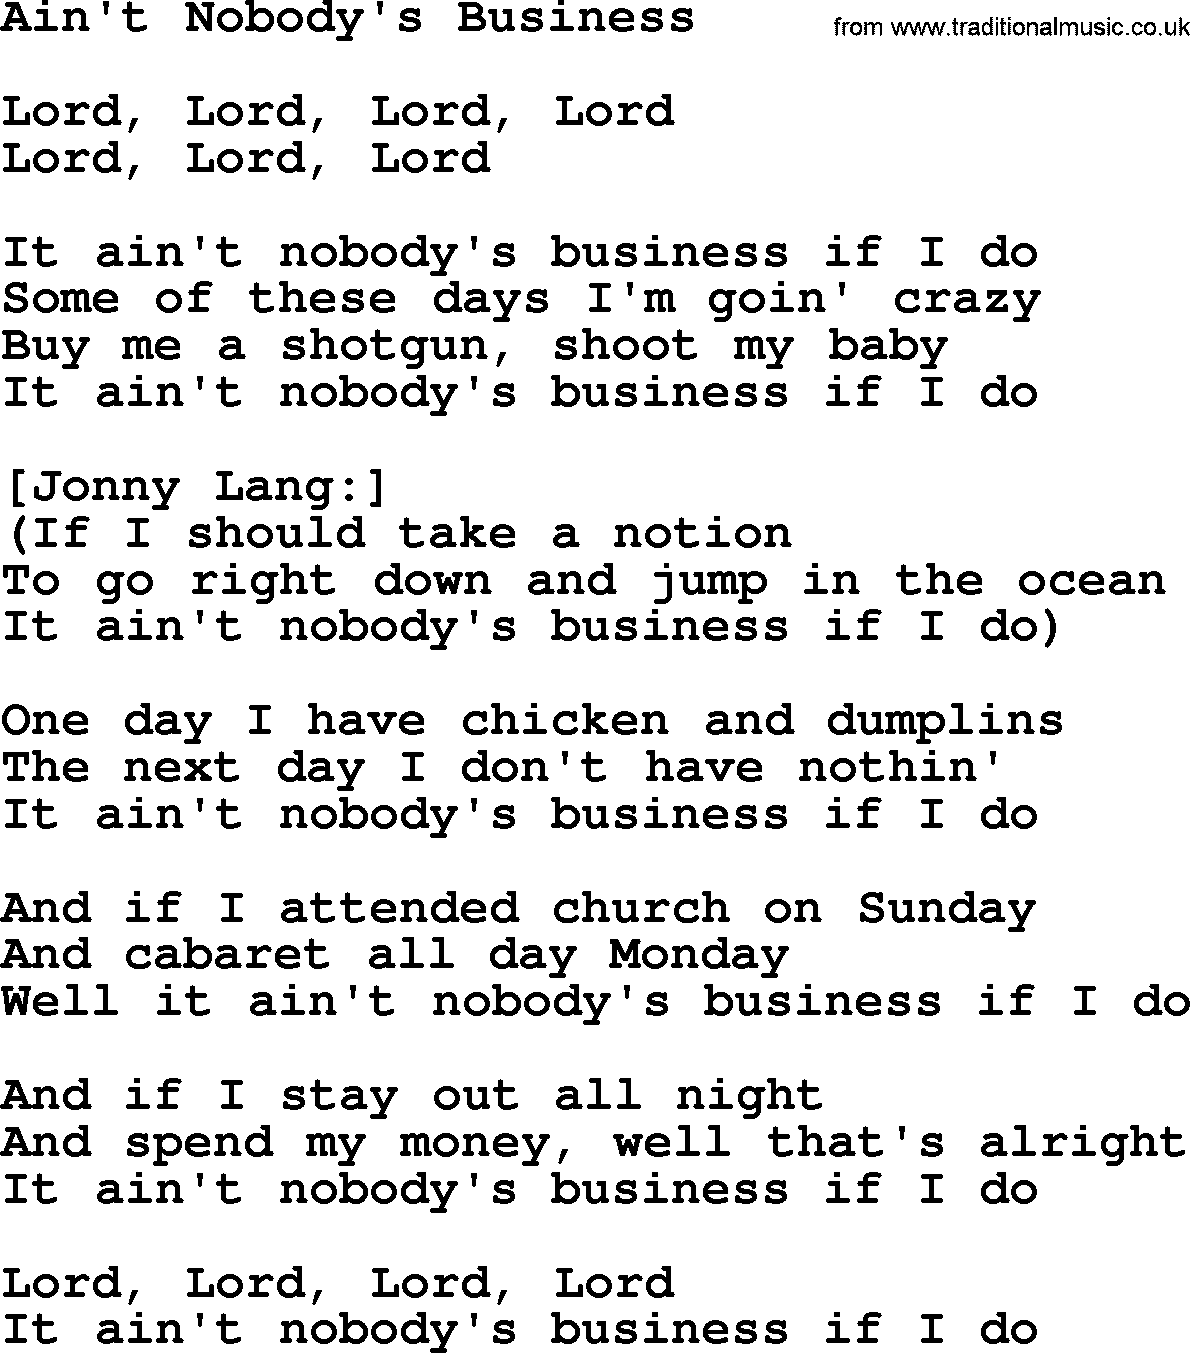 Willie Nelson song: Ain't Nobody's Business lyrics